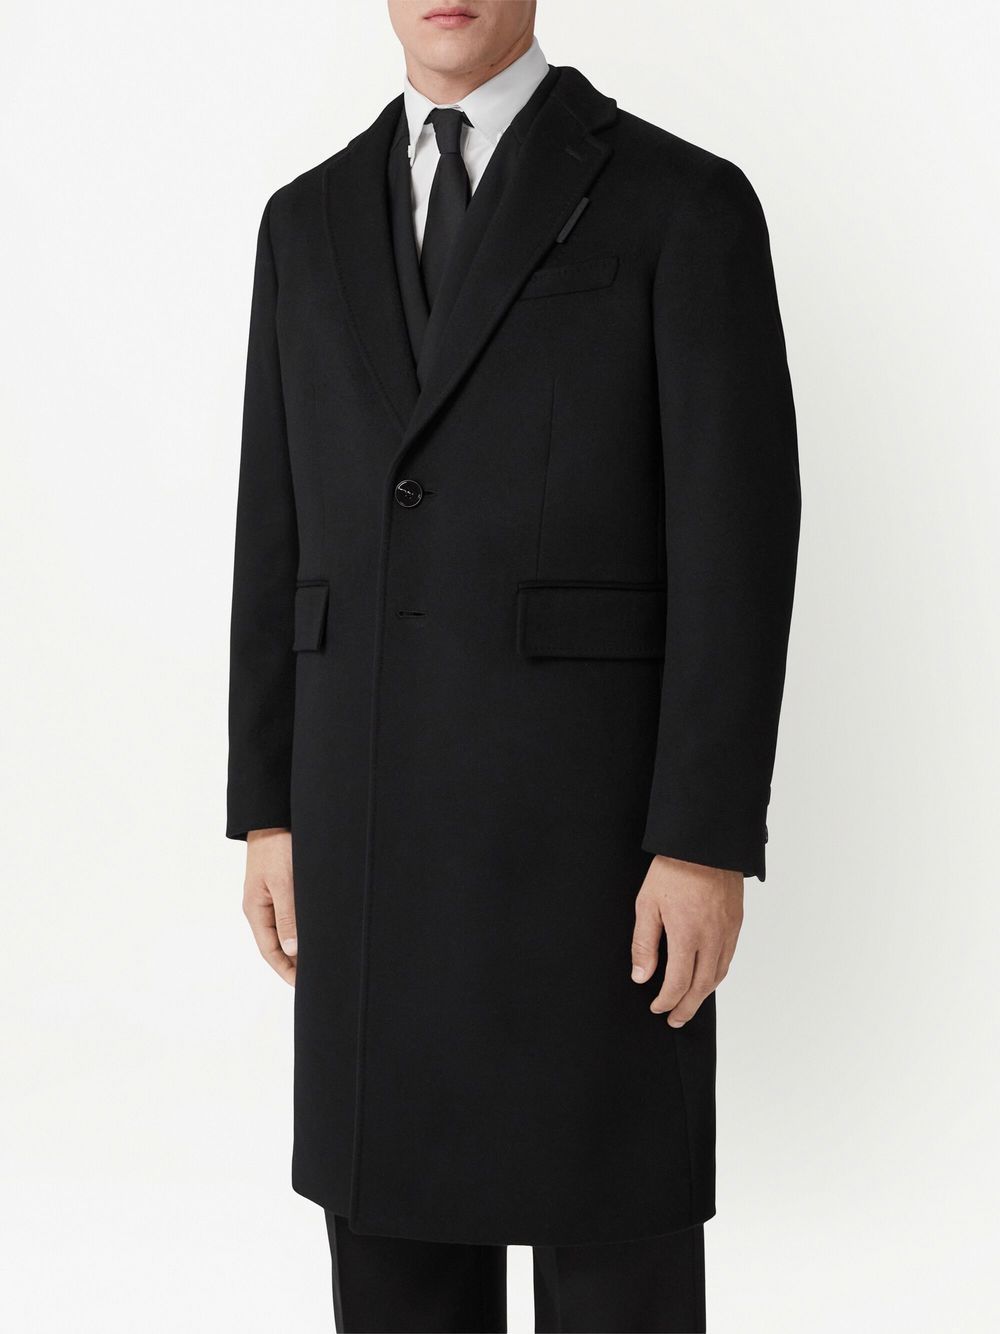 paraply Ruddy Medic Burberry Black Tailored Coat | ModeSens